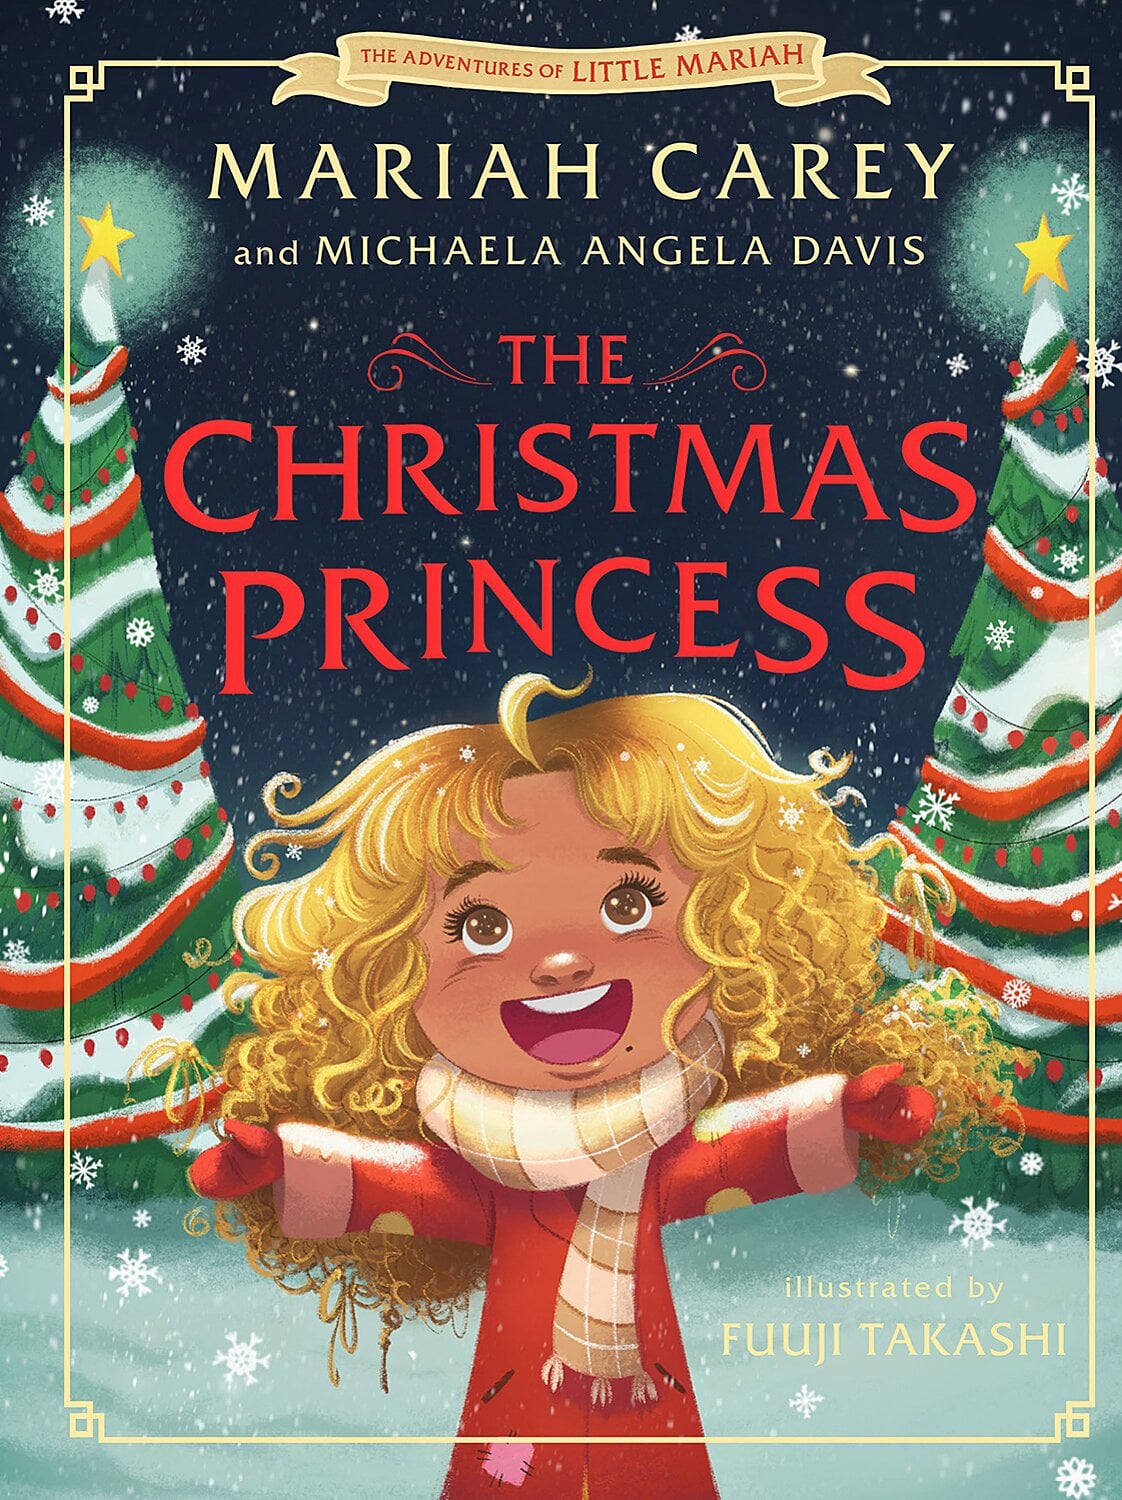 Mariah Carey The Christmas Princesshttps://app.asana.com/0/1135954362417873/1201639589817170/fCredit: Henry Holt Books for Young Readers